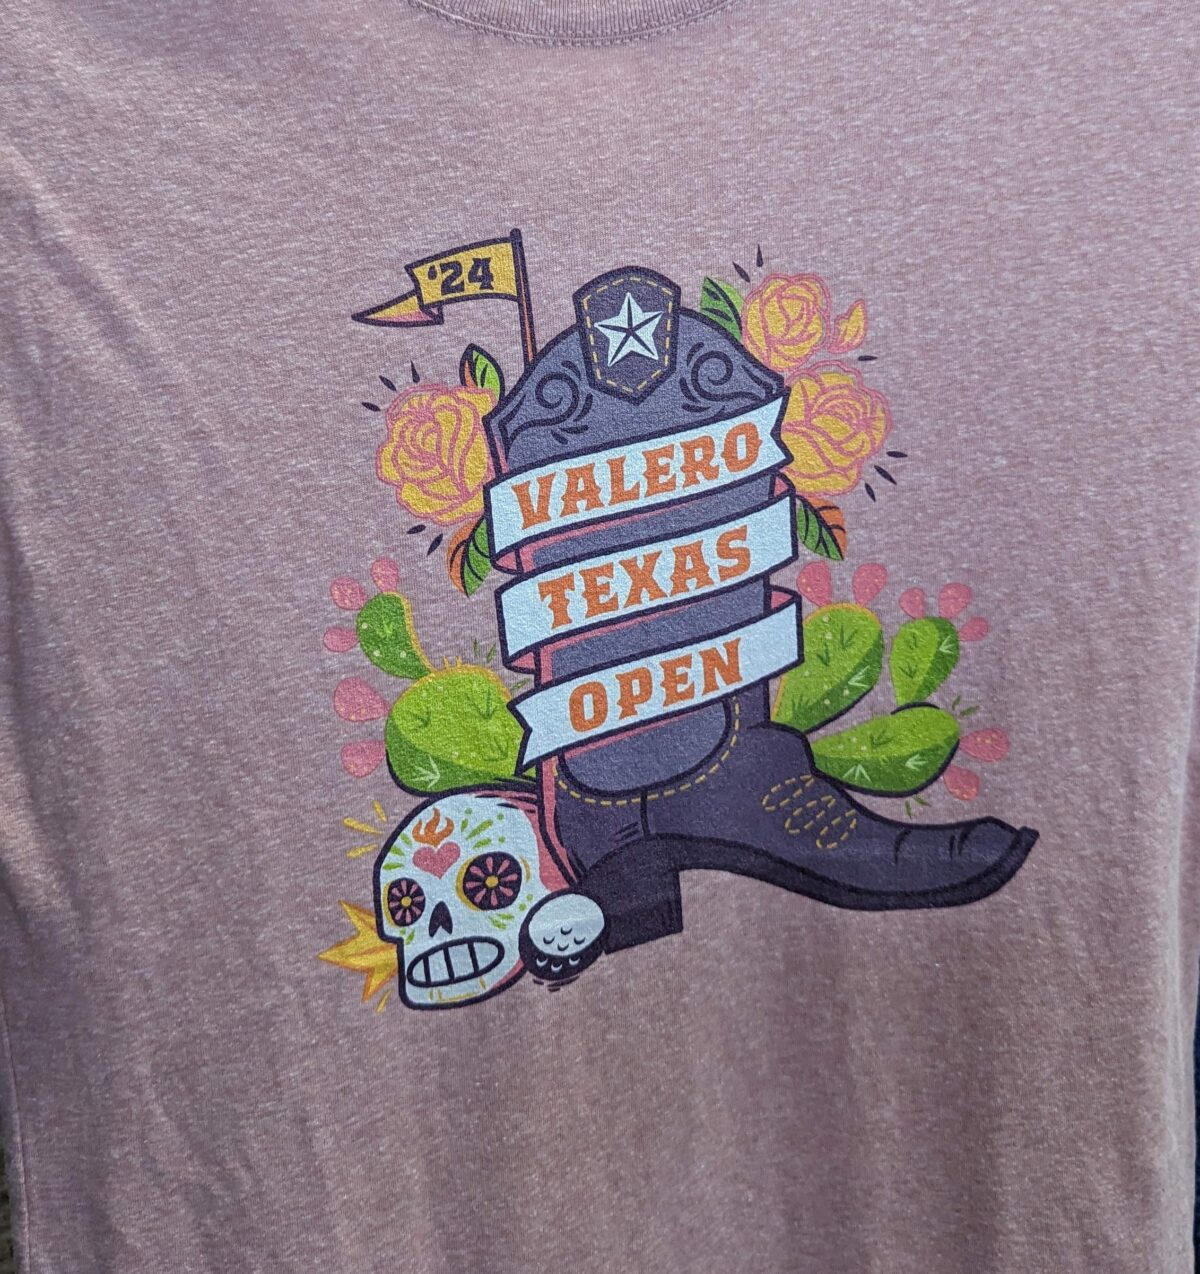 New logos, old Texas roots on display in 2024 Valero Texas Open merchandise shop